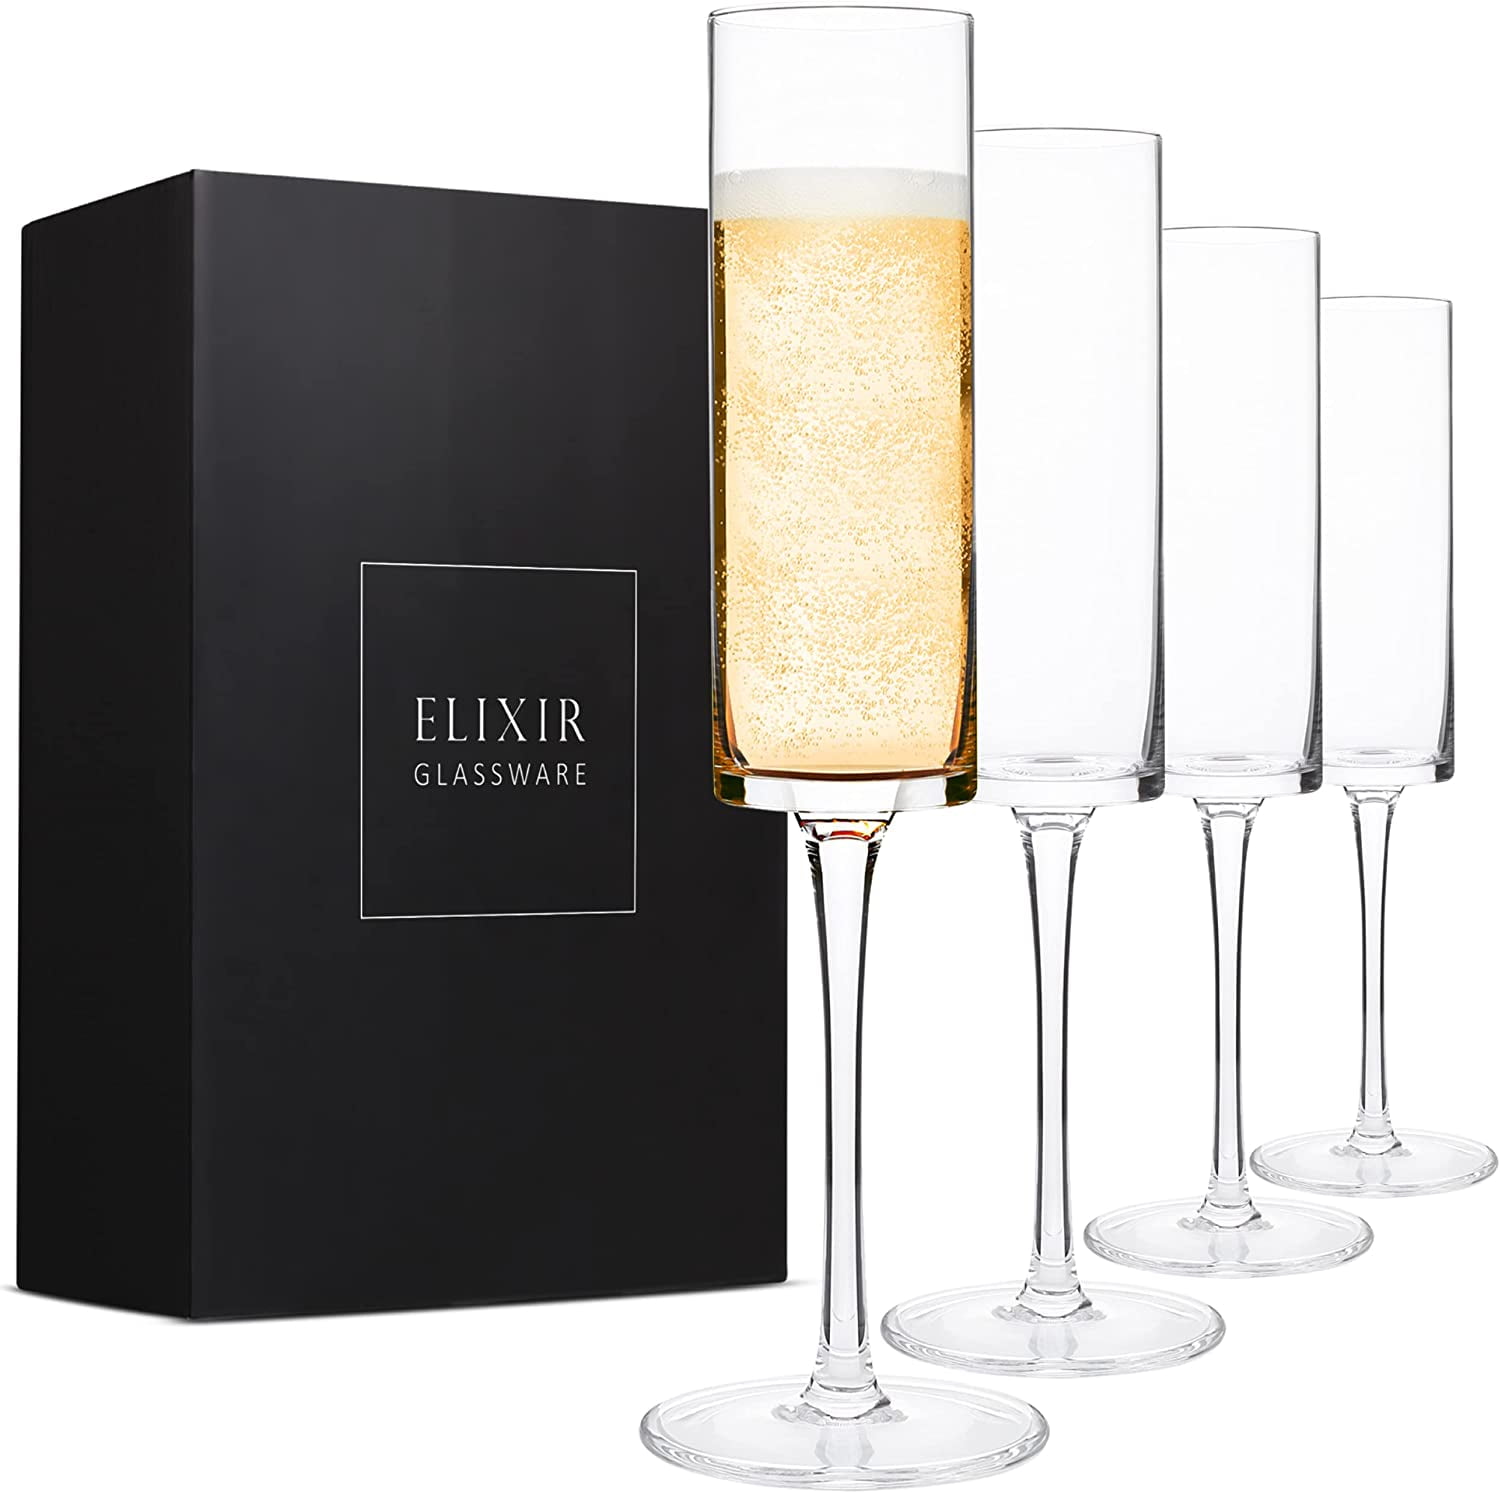 G Francis Champagne Flutes Set - 4pk Tall Slanted Edge Champagne Flute Glasses, Size: One Size